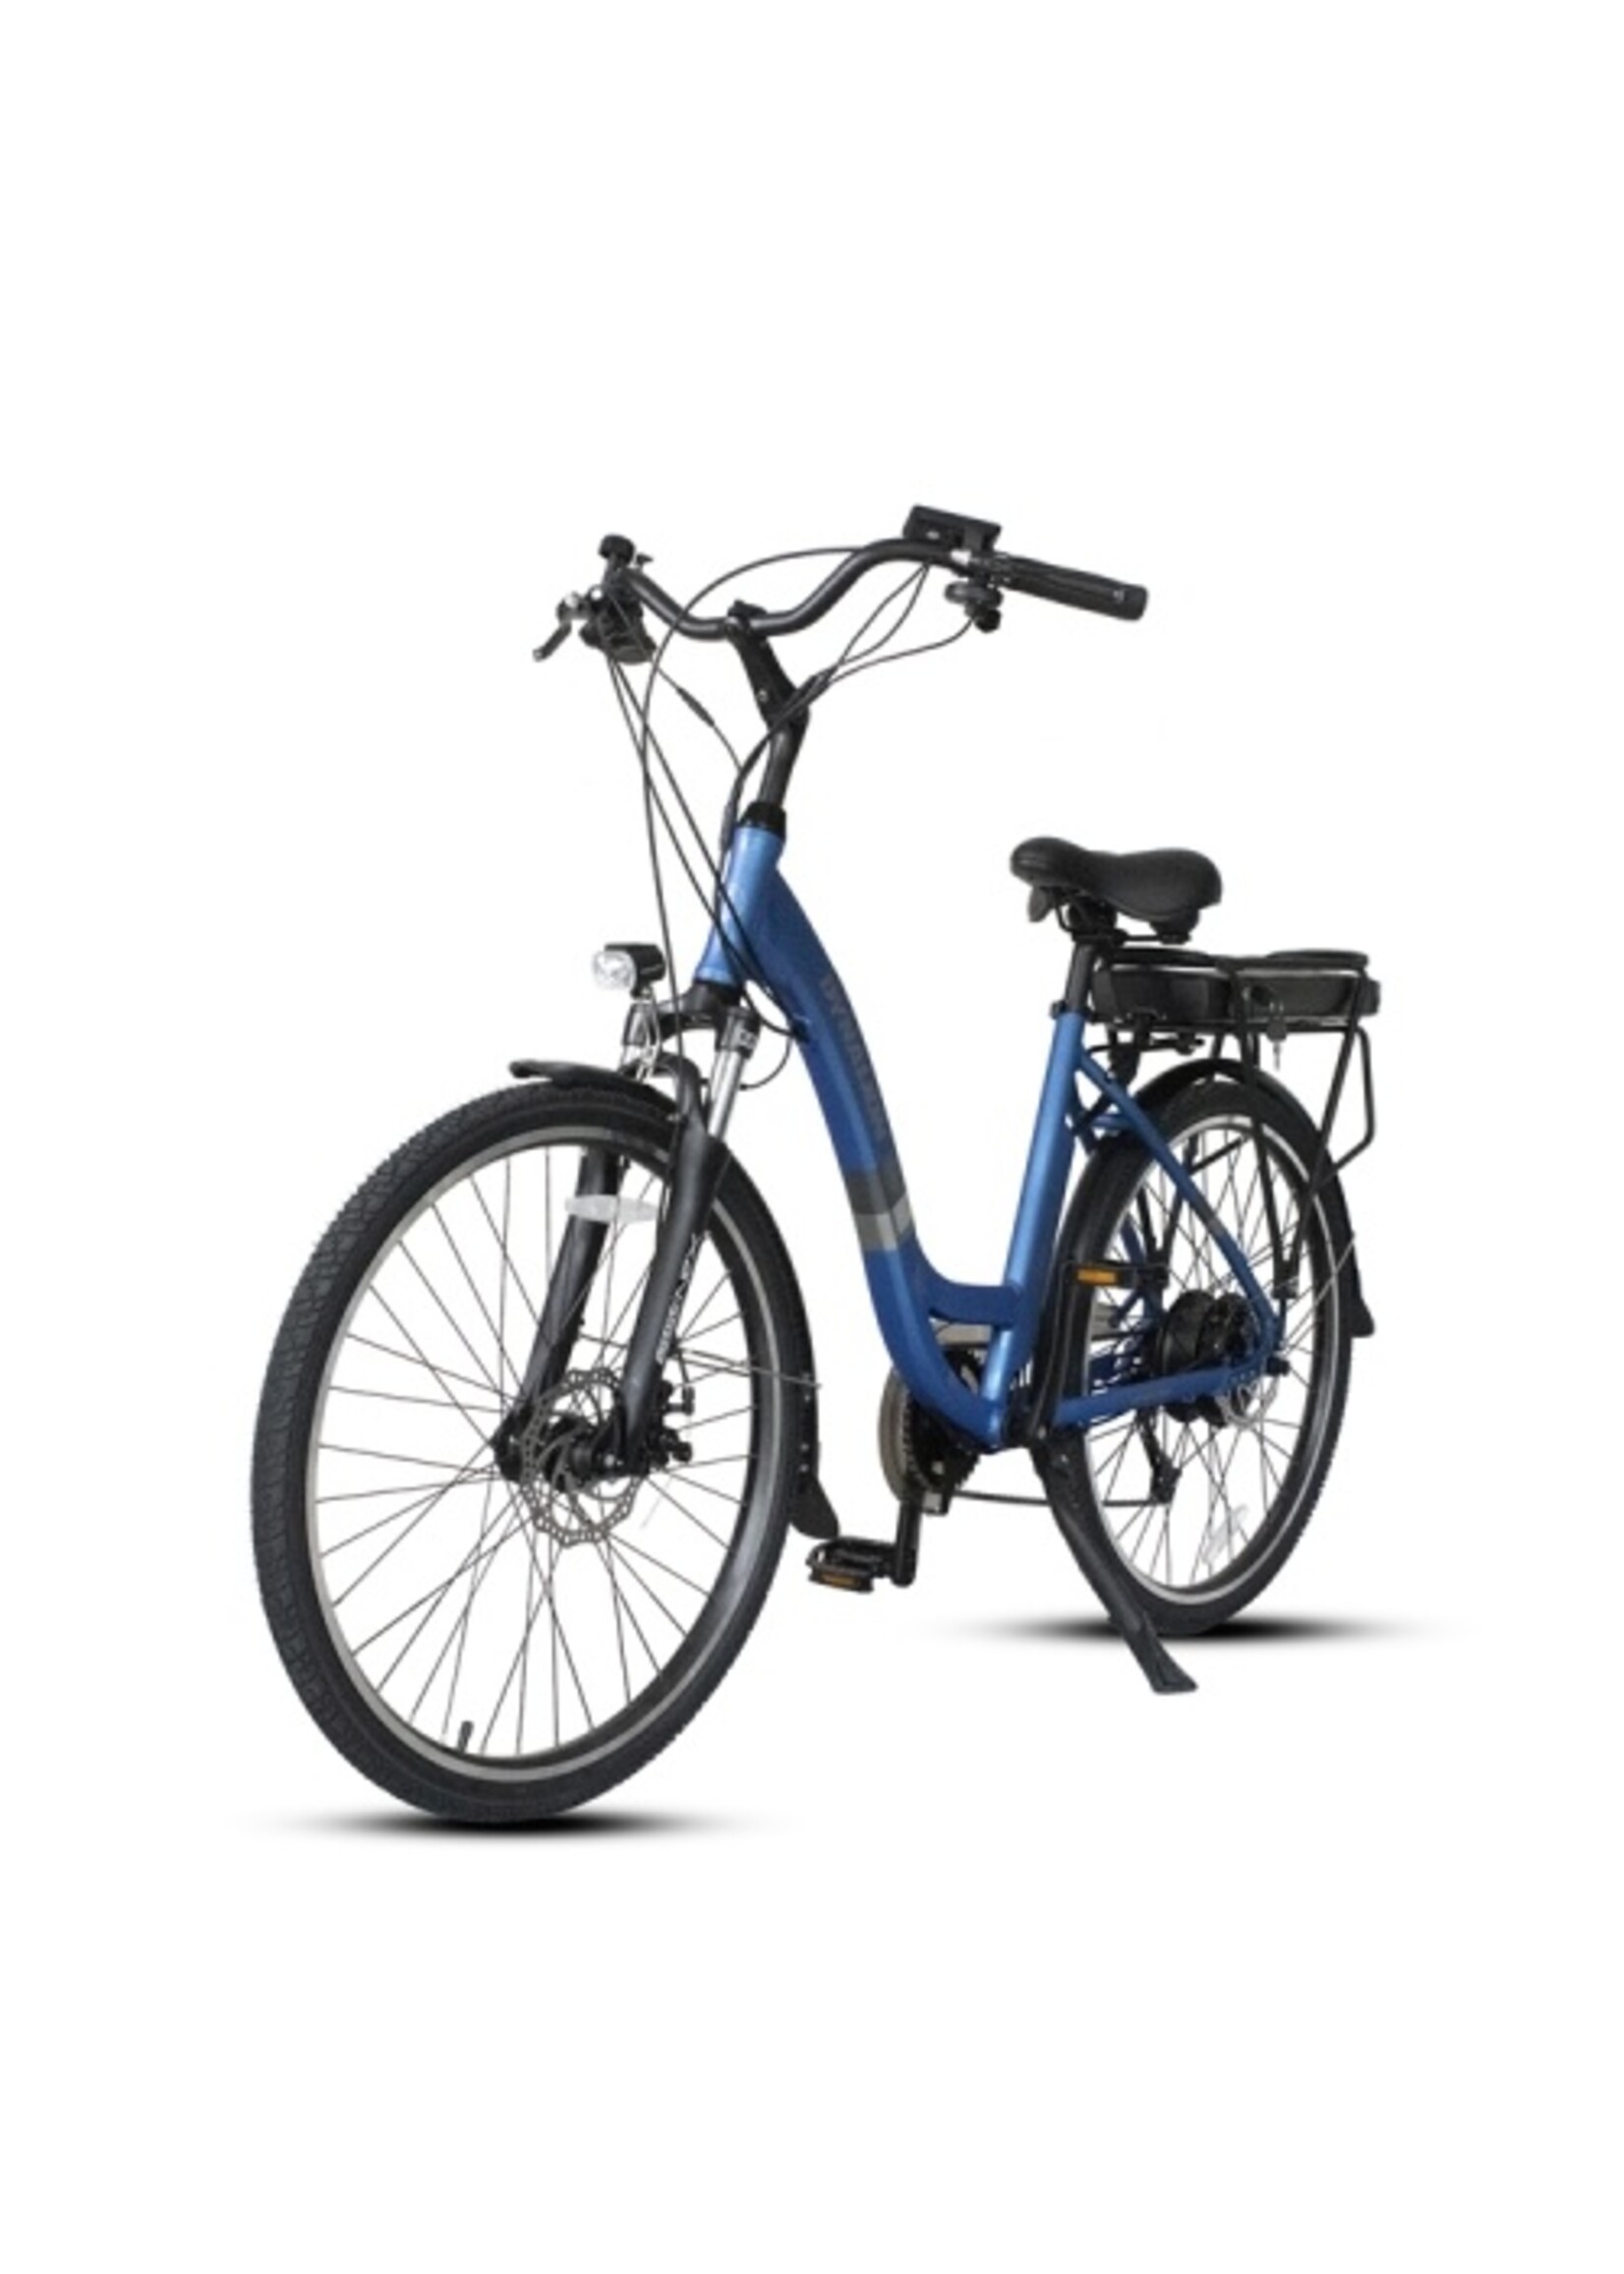 Dynalion C1 Hybrid Bicycle